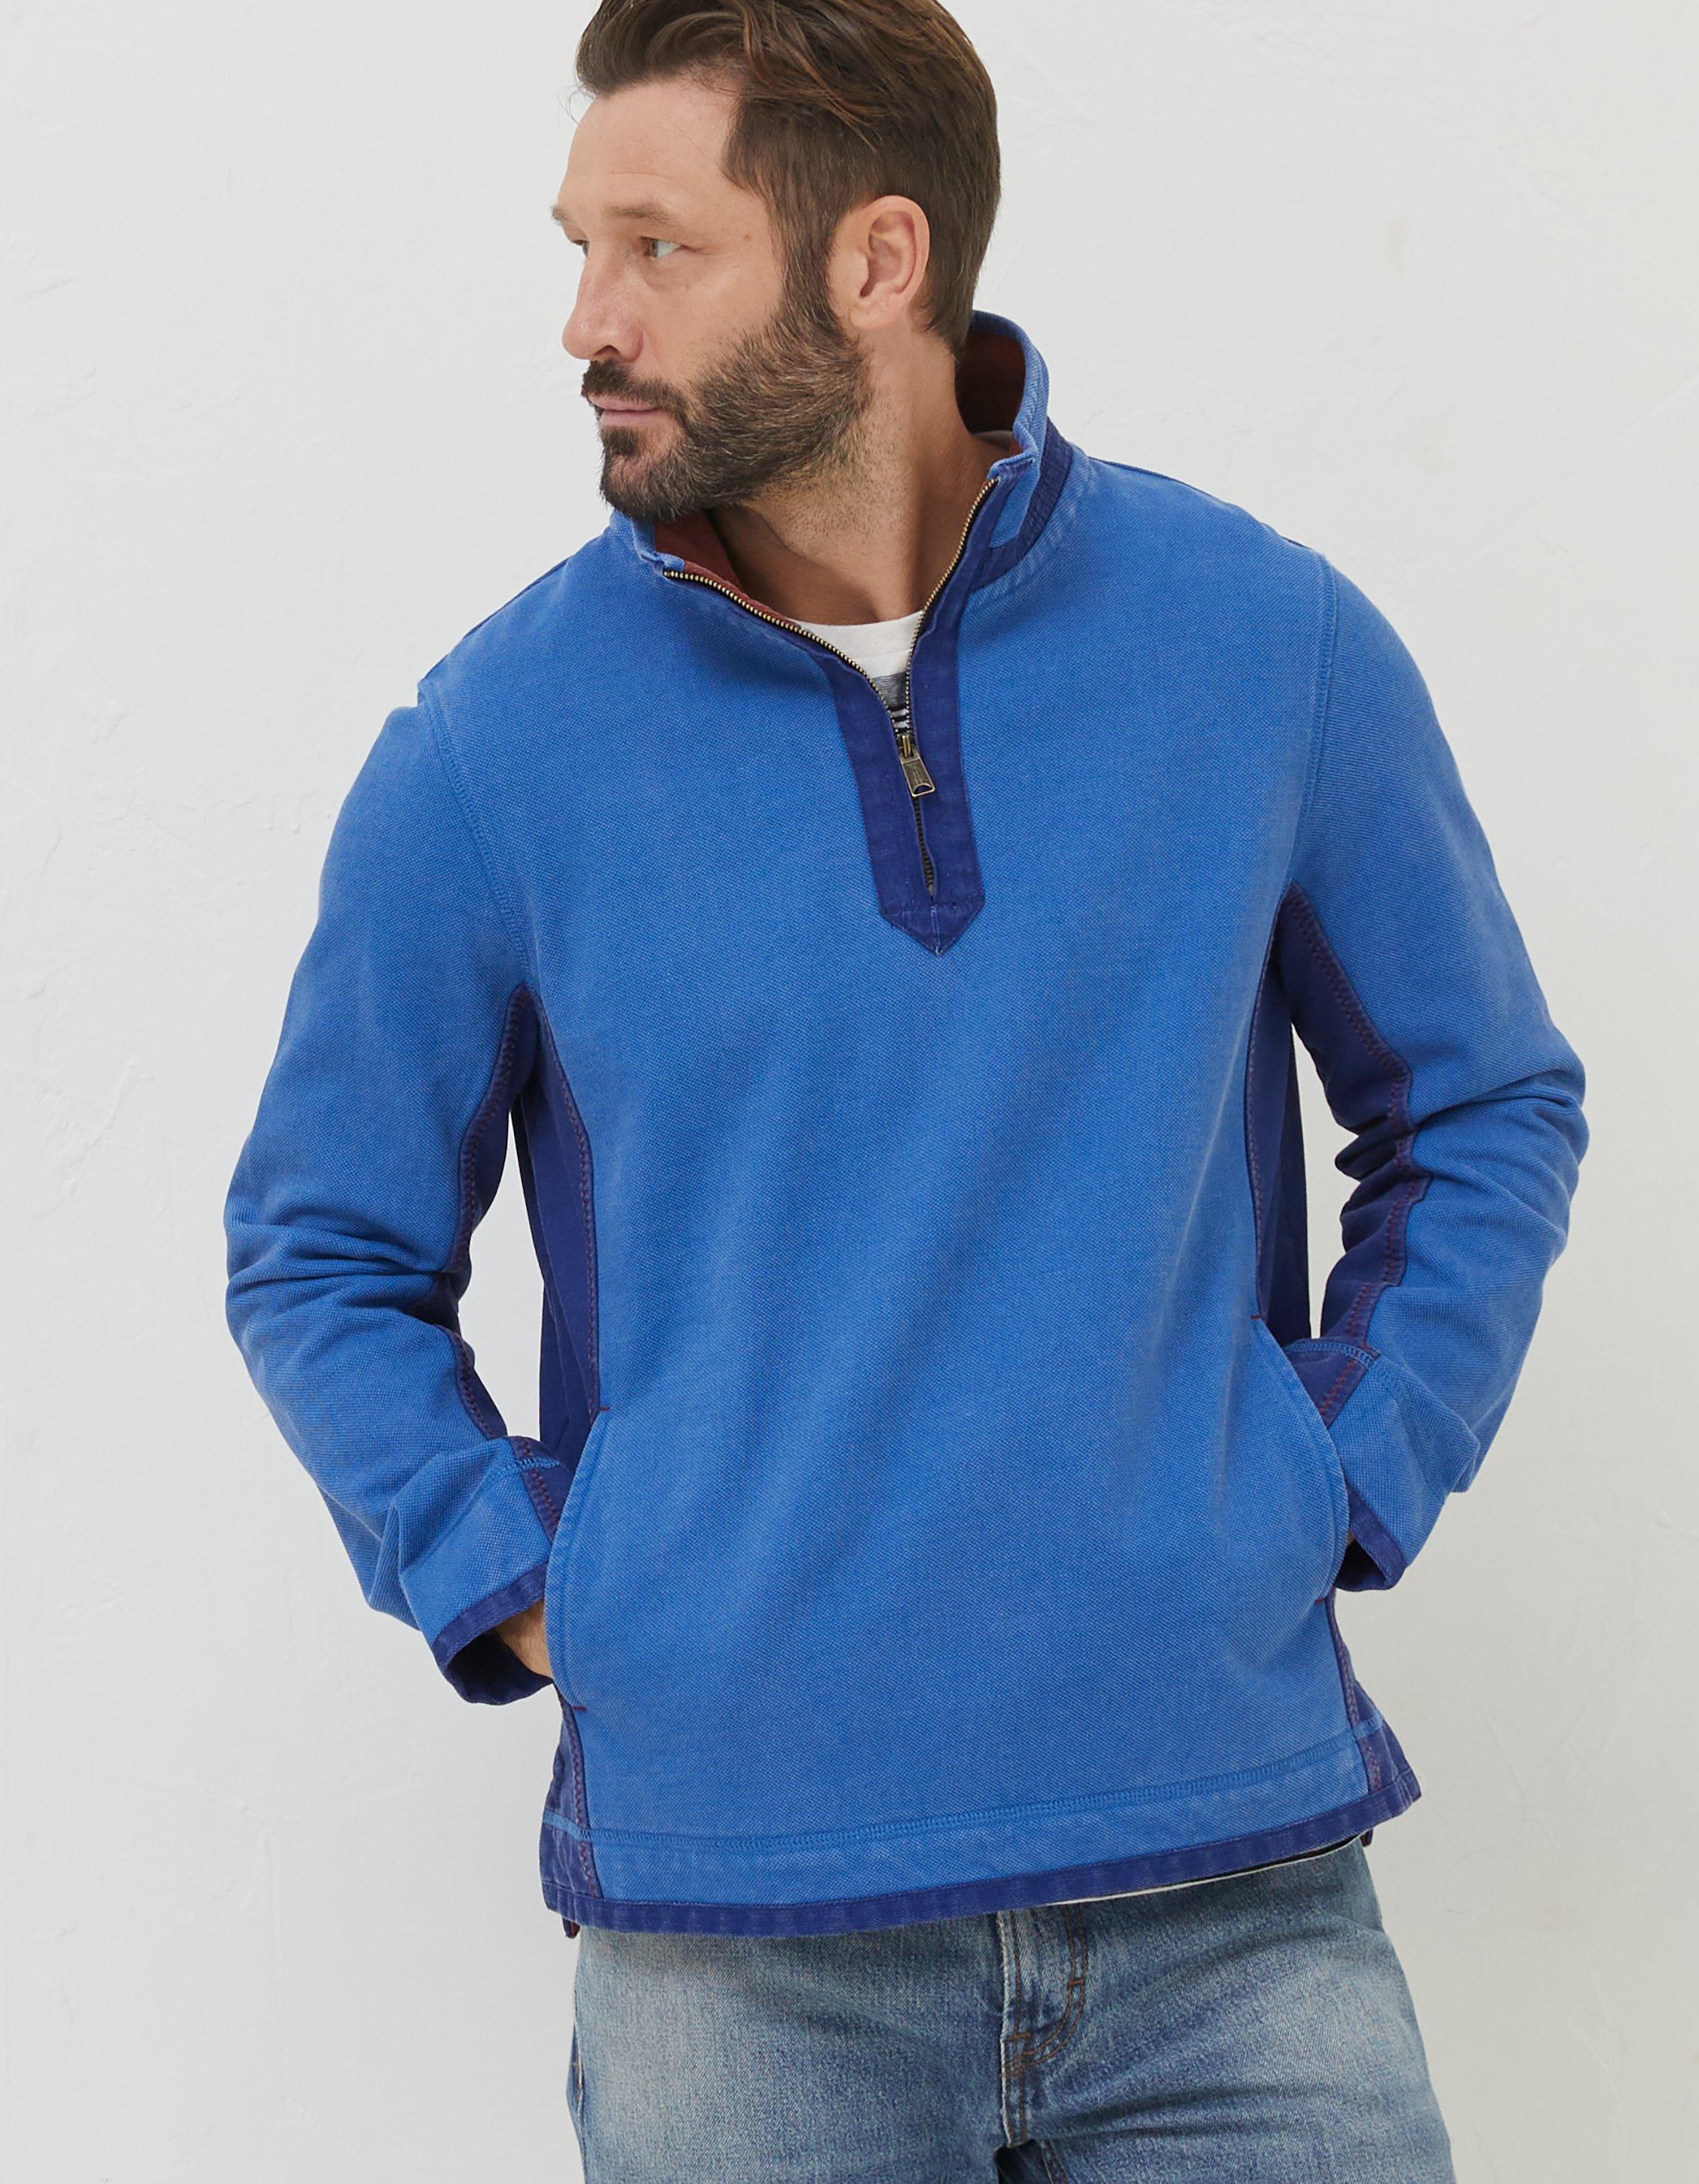 Airlie Pocket Panel Sweatshirt, Sweatshirts & Hoodies | FatFace.com